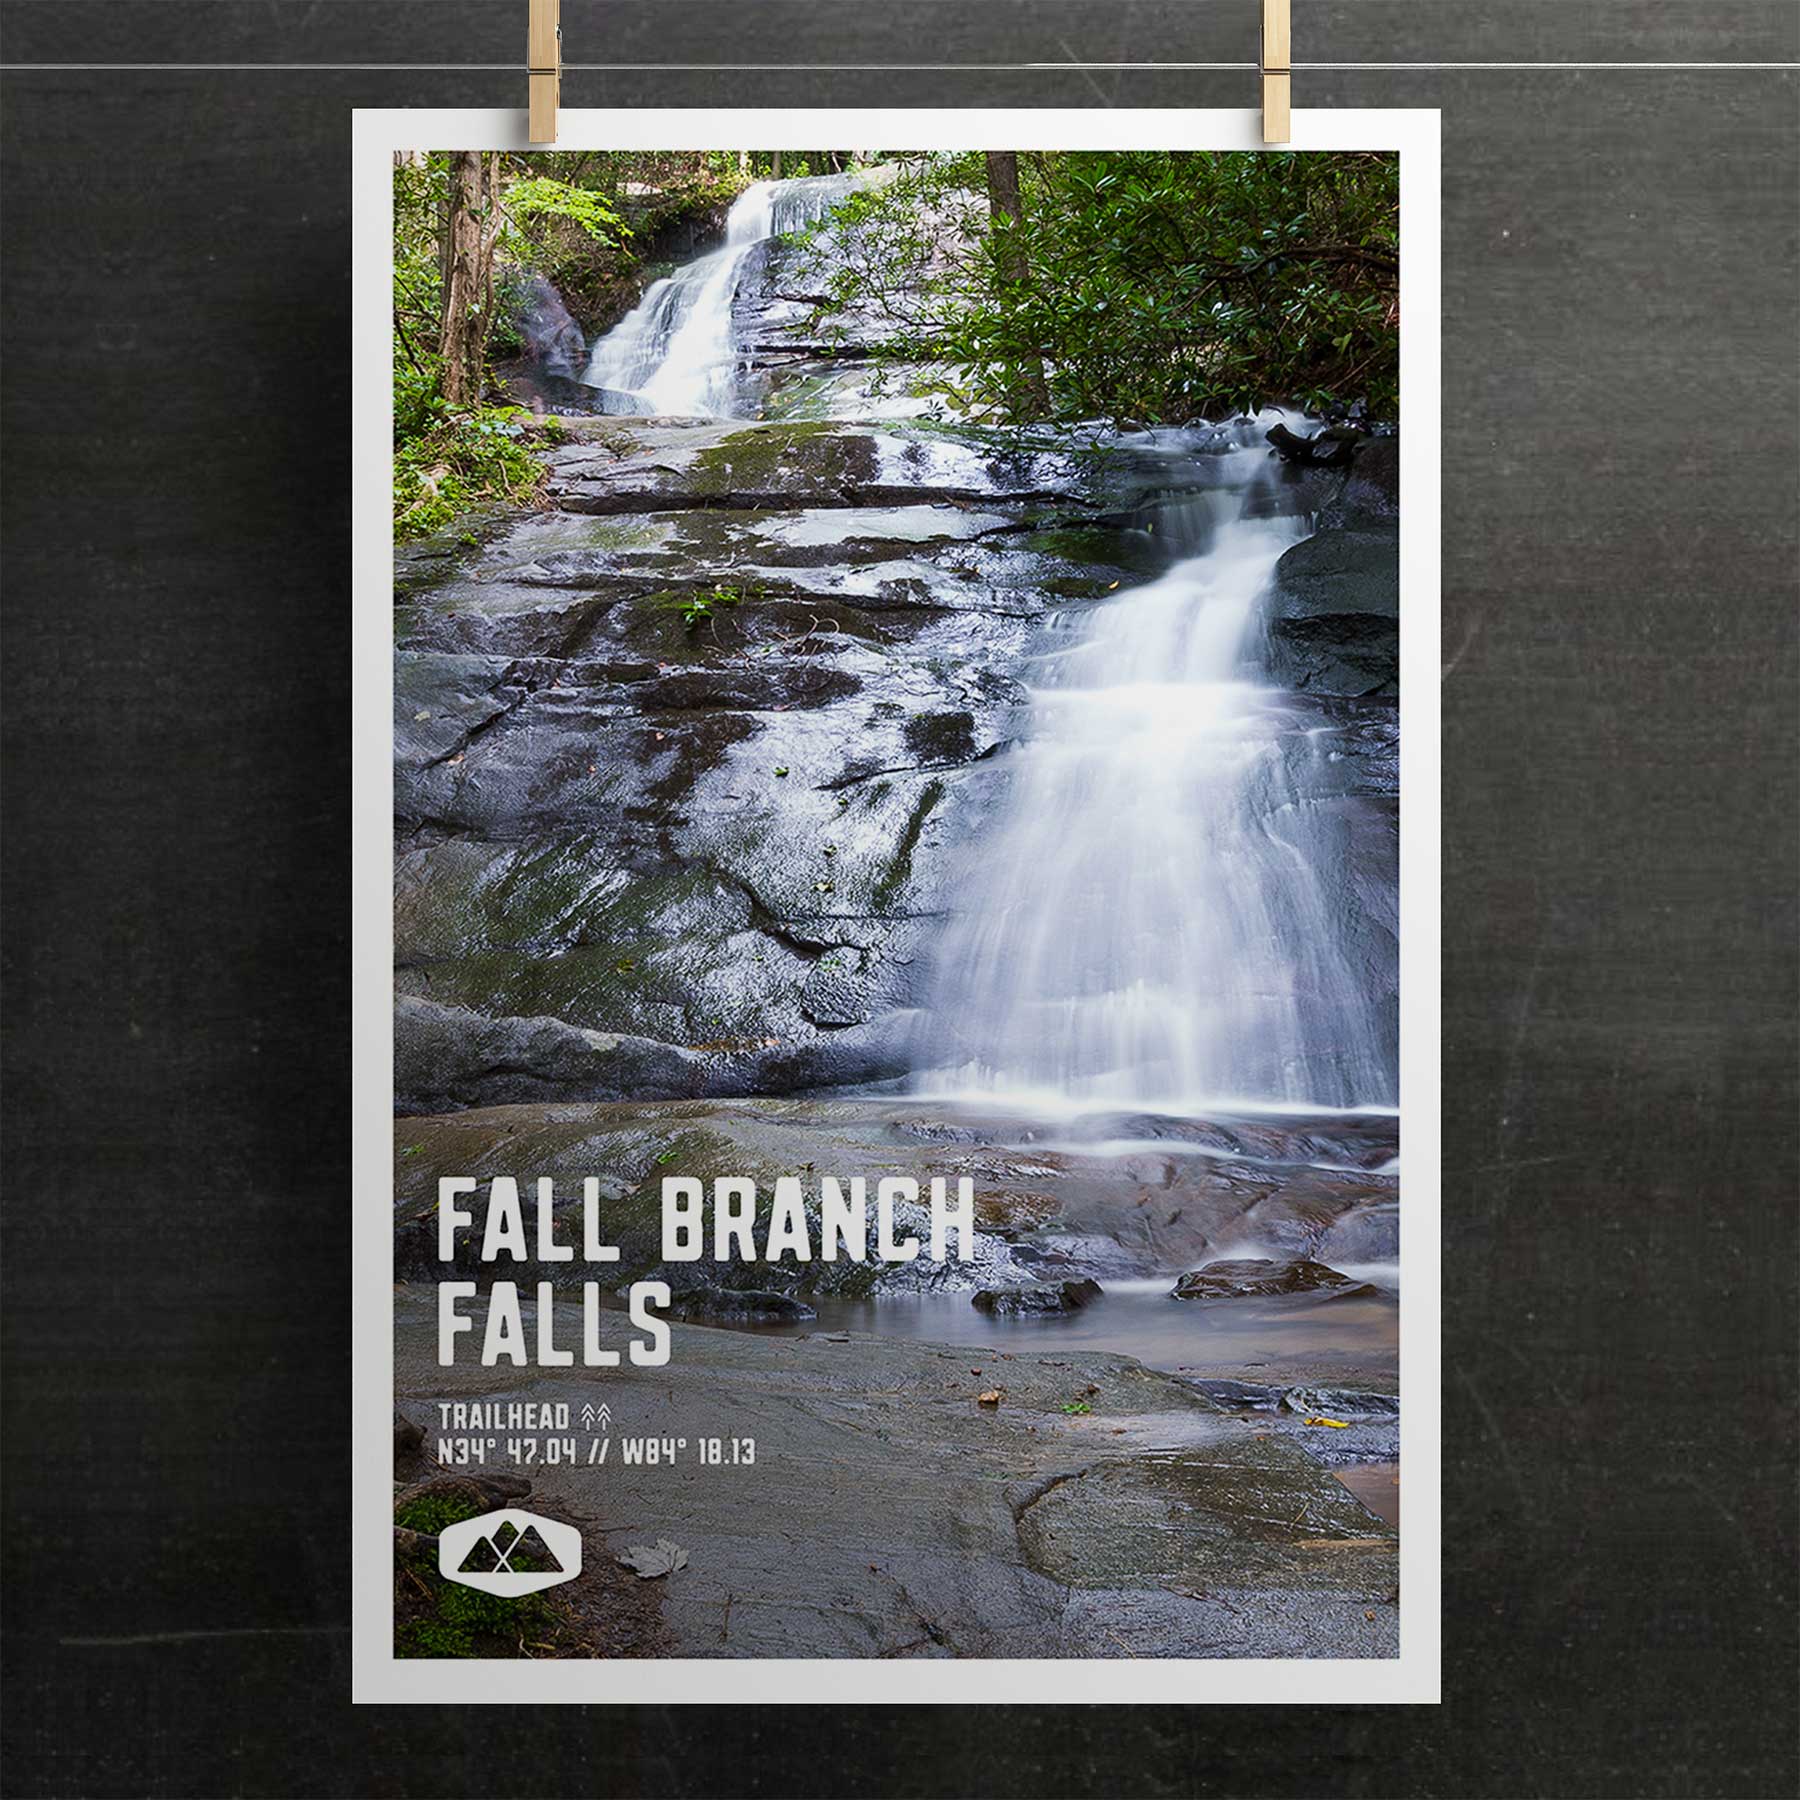 Fall Branch Falls Poster